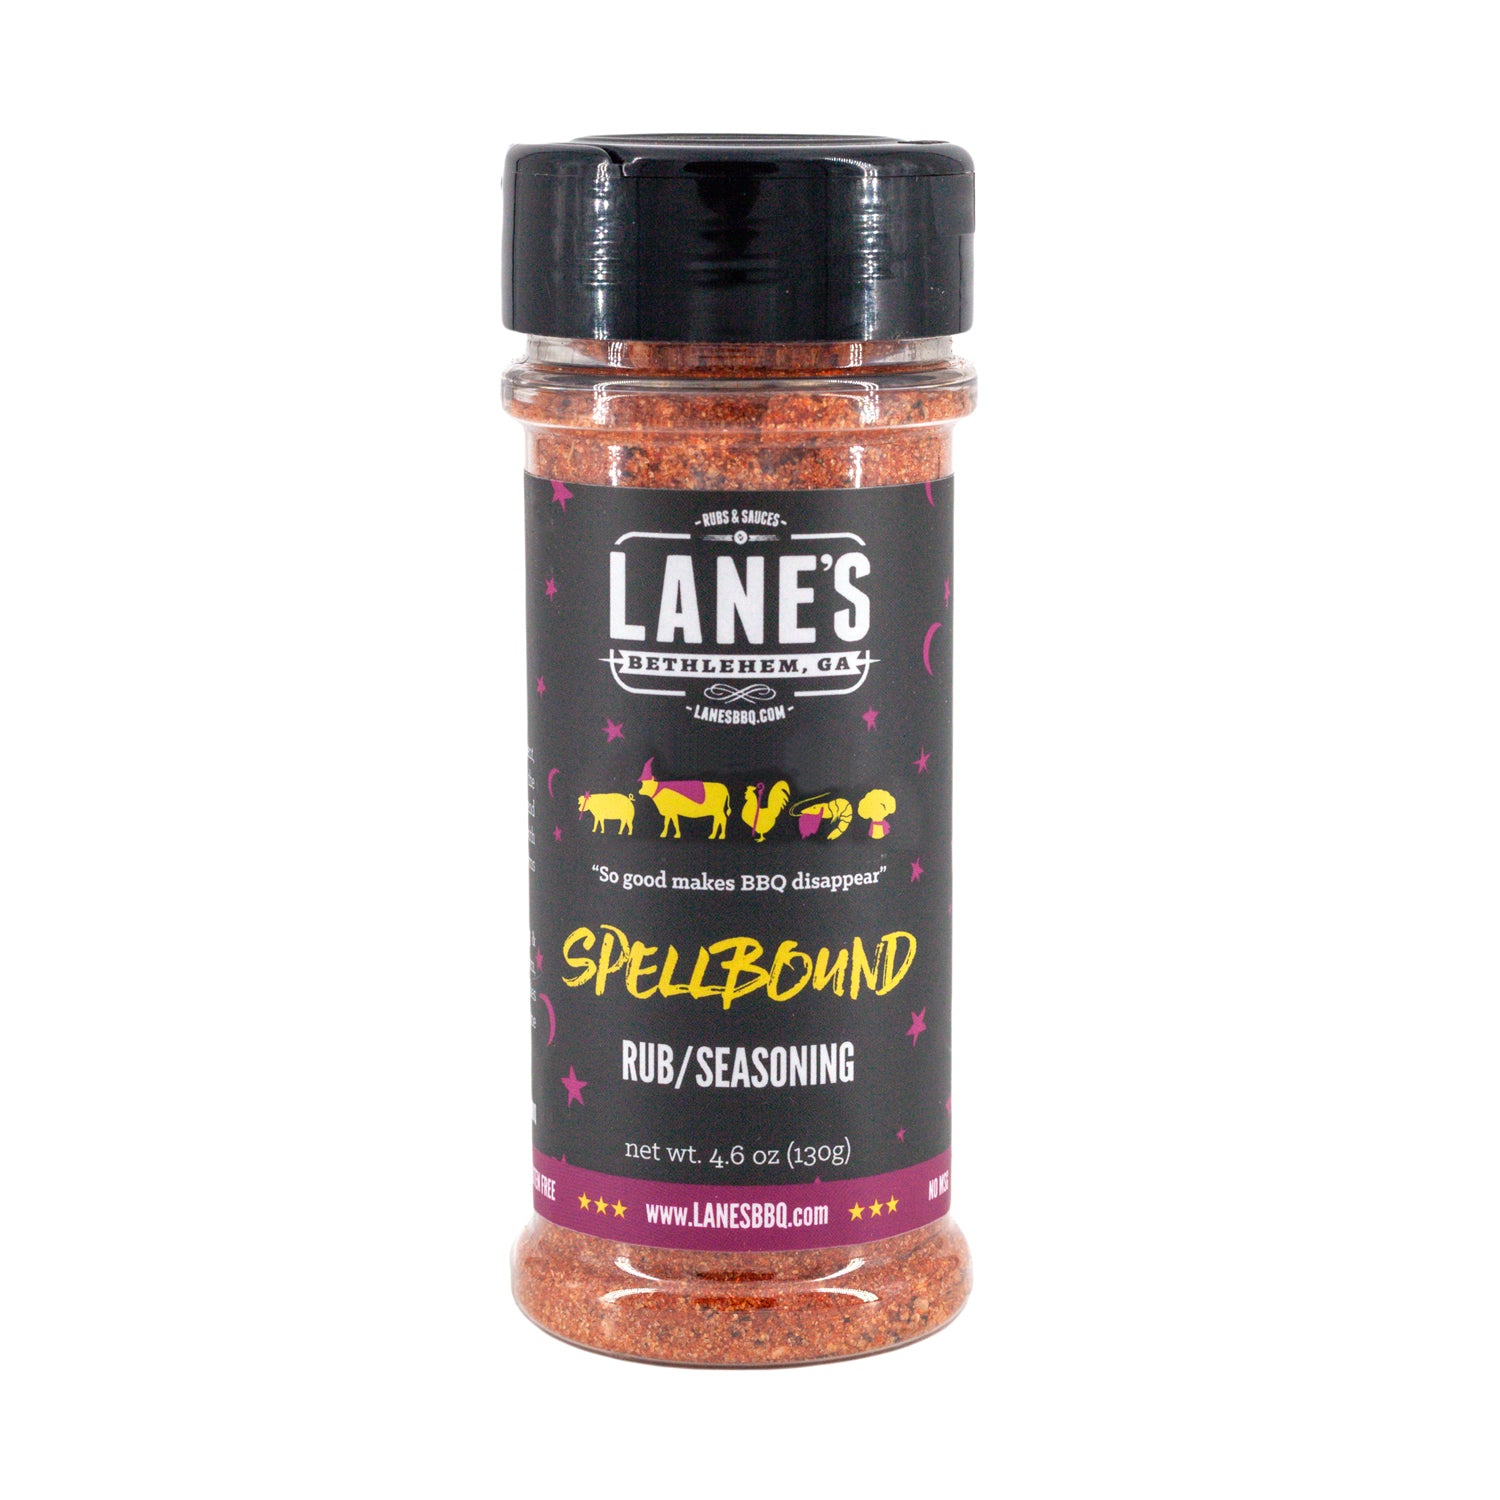 Lane's BBQ Ham Seasoning and Glaze Kit